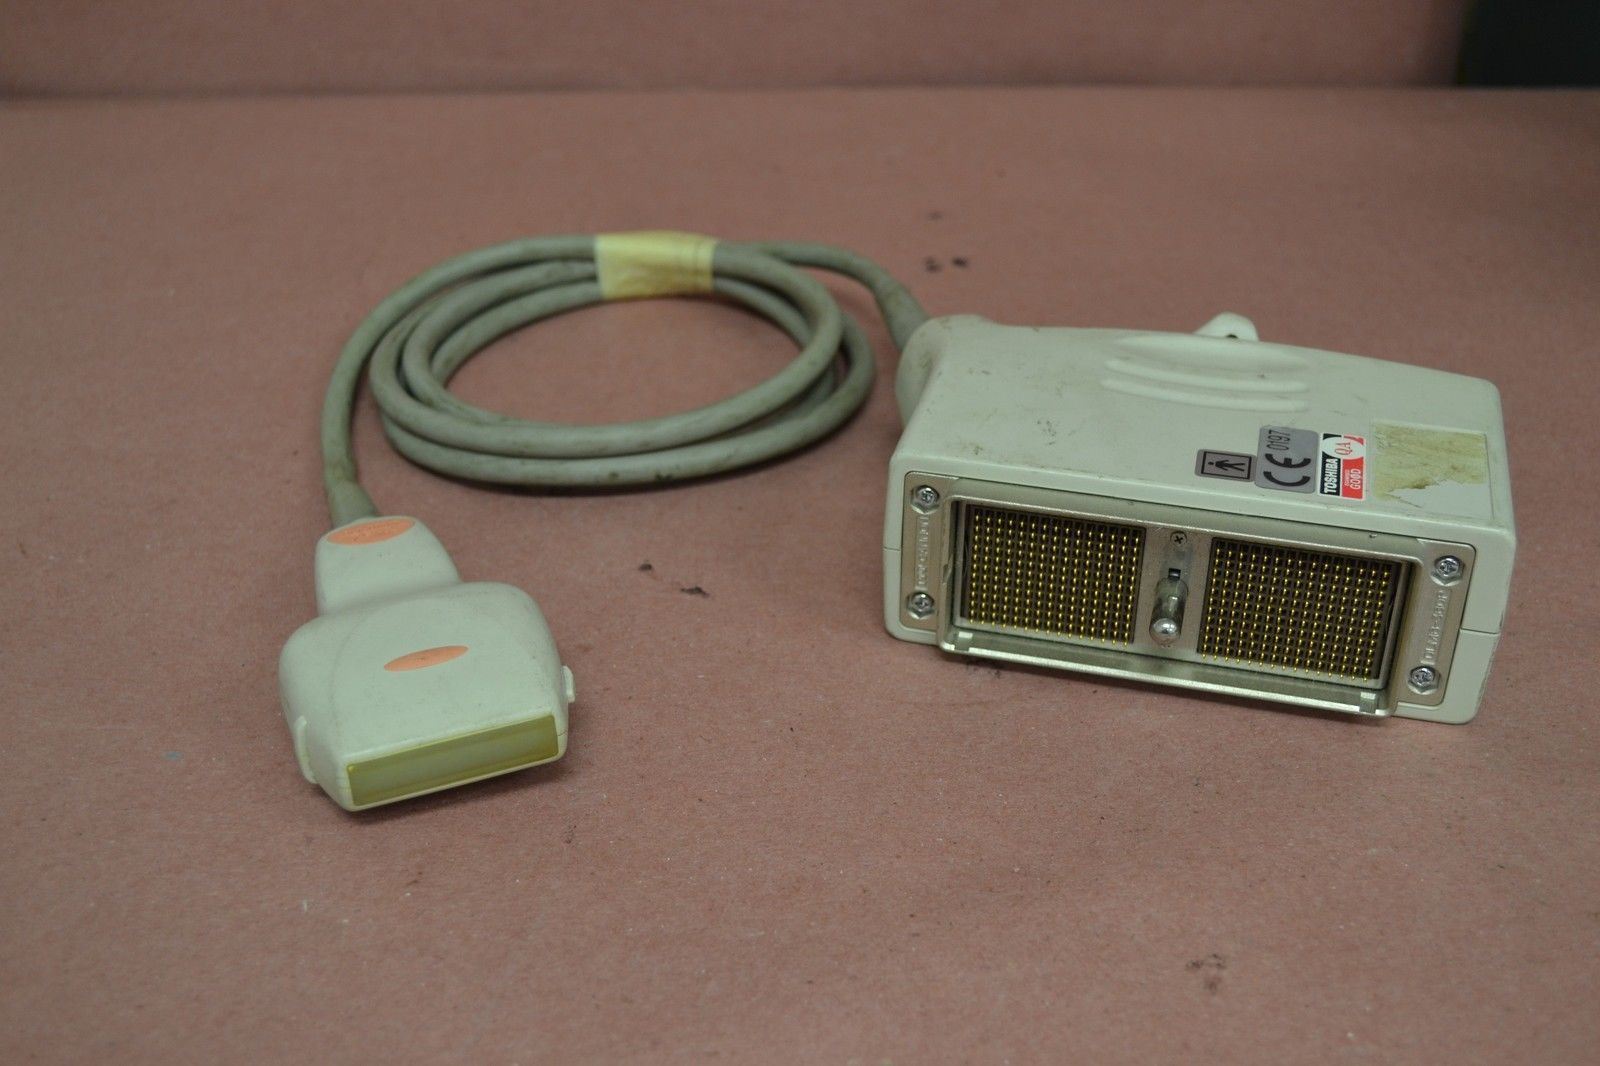 Toshiba Aplio PLT-704AT 6-11MHz Linear Ultrasound Transducer Probe DIAGNOSTIC ULTRASOUND MACHINES FOR SALE